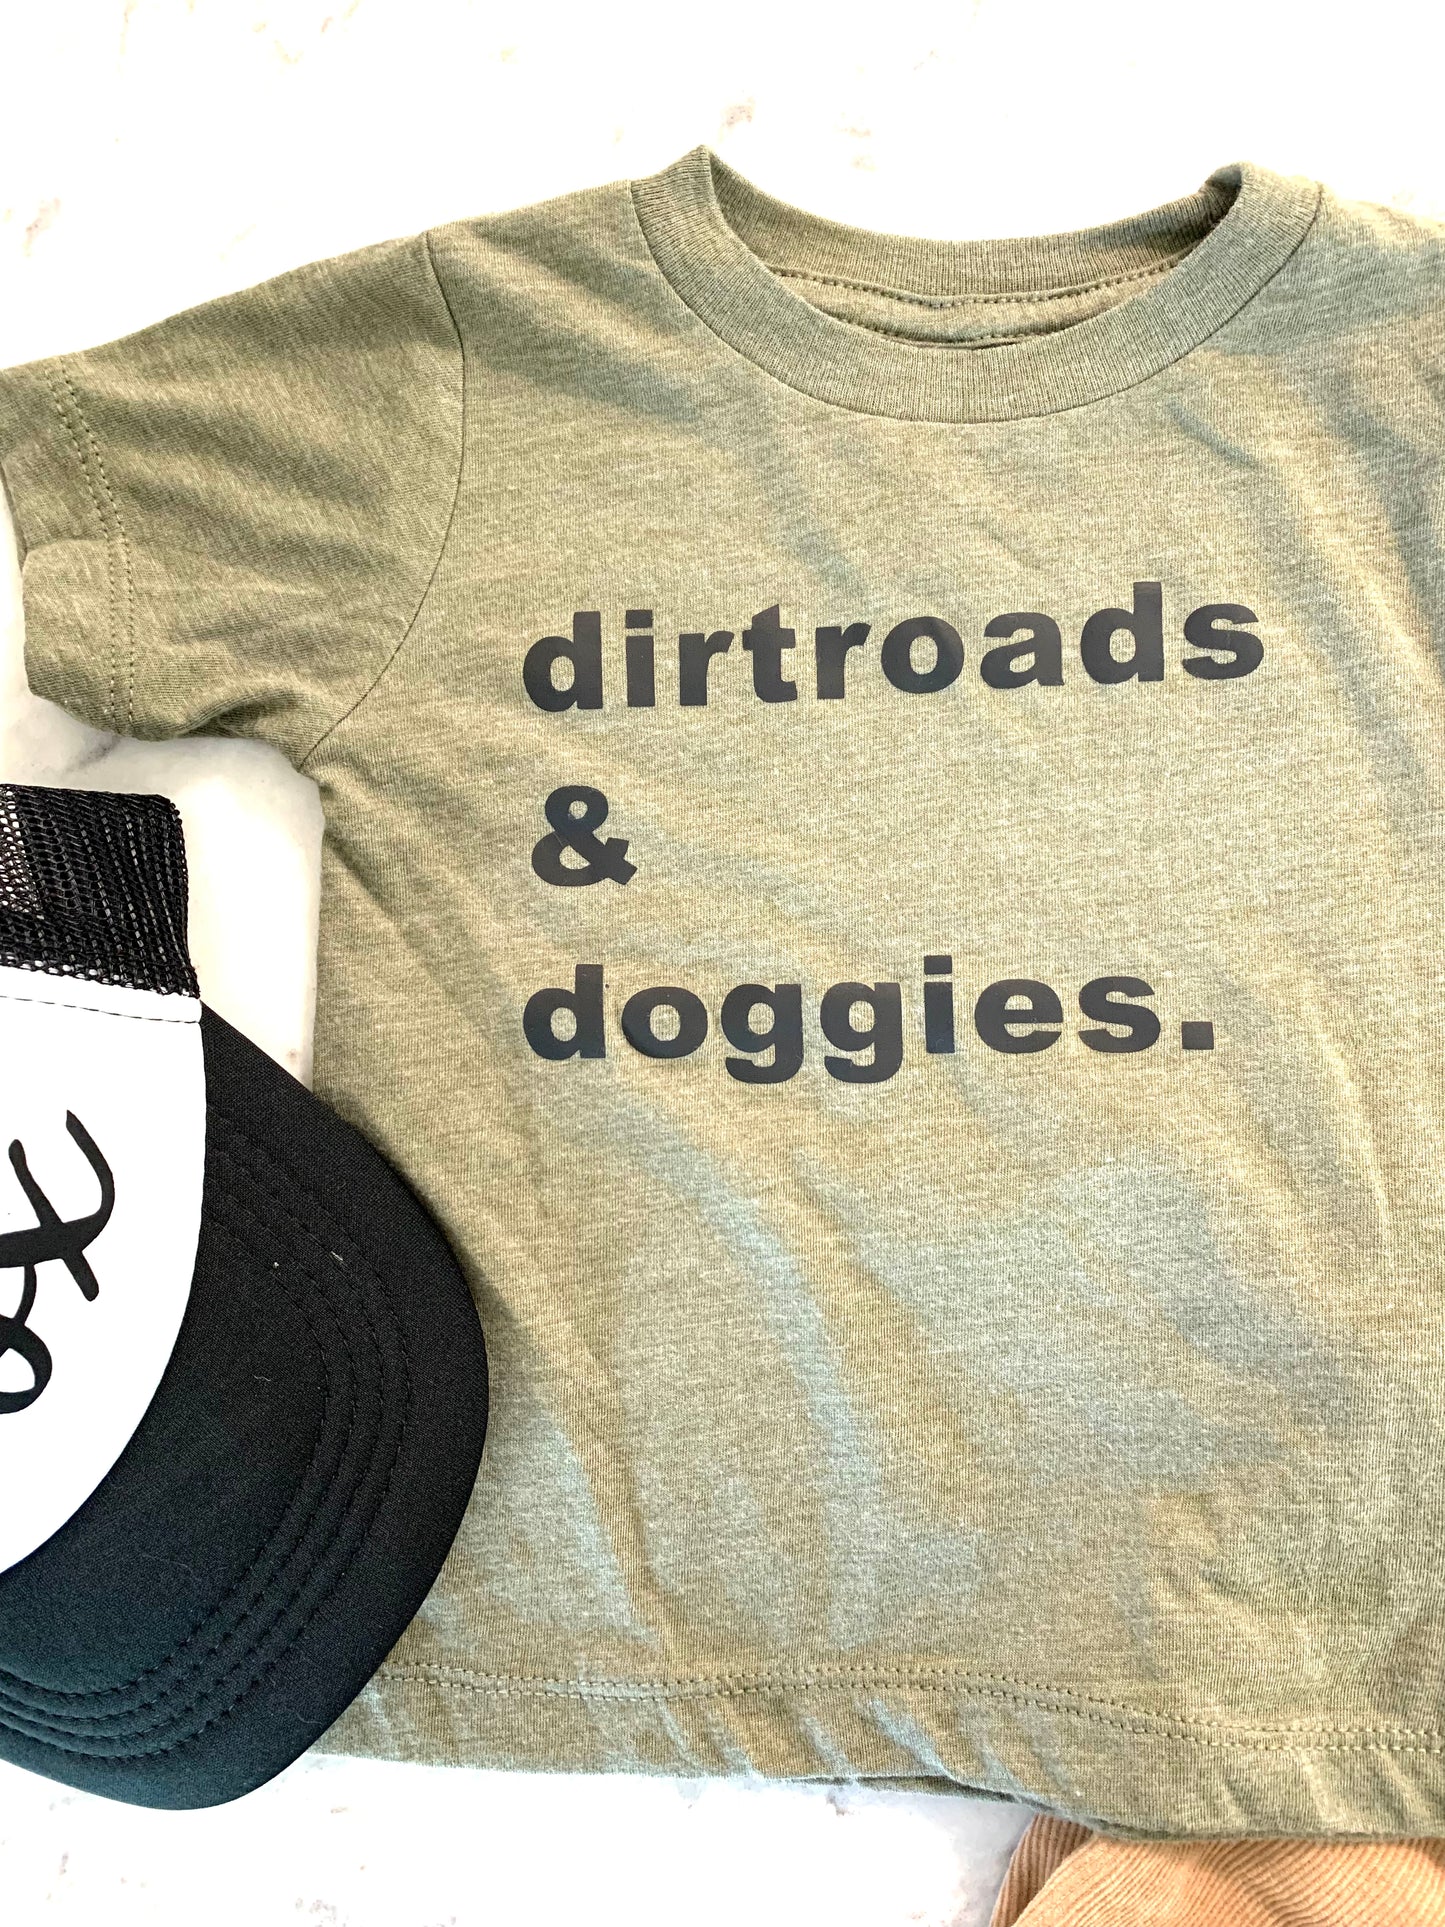 Dirt roads & doggies graphic